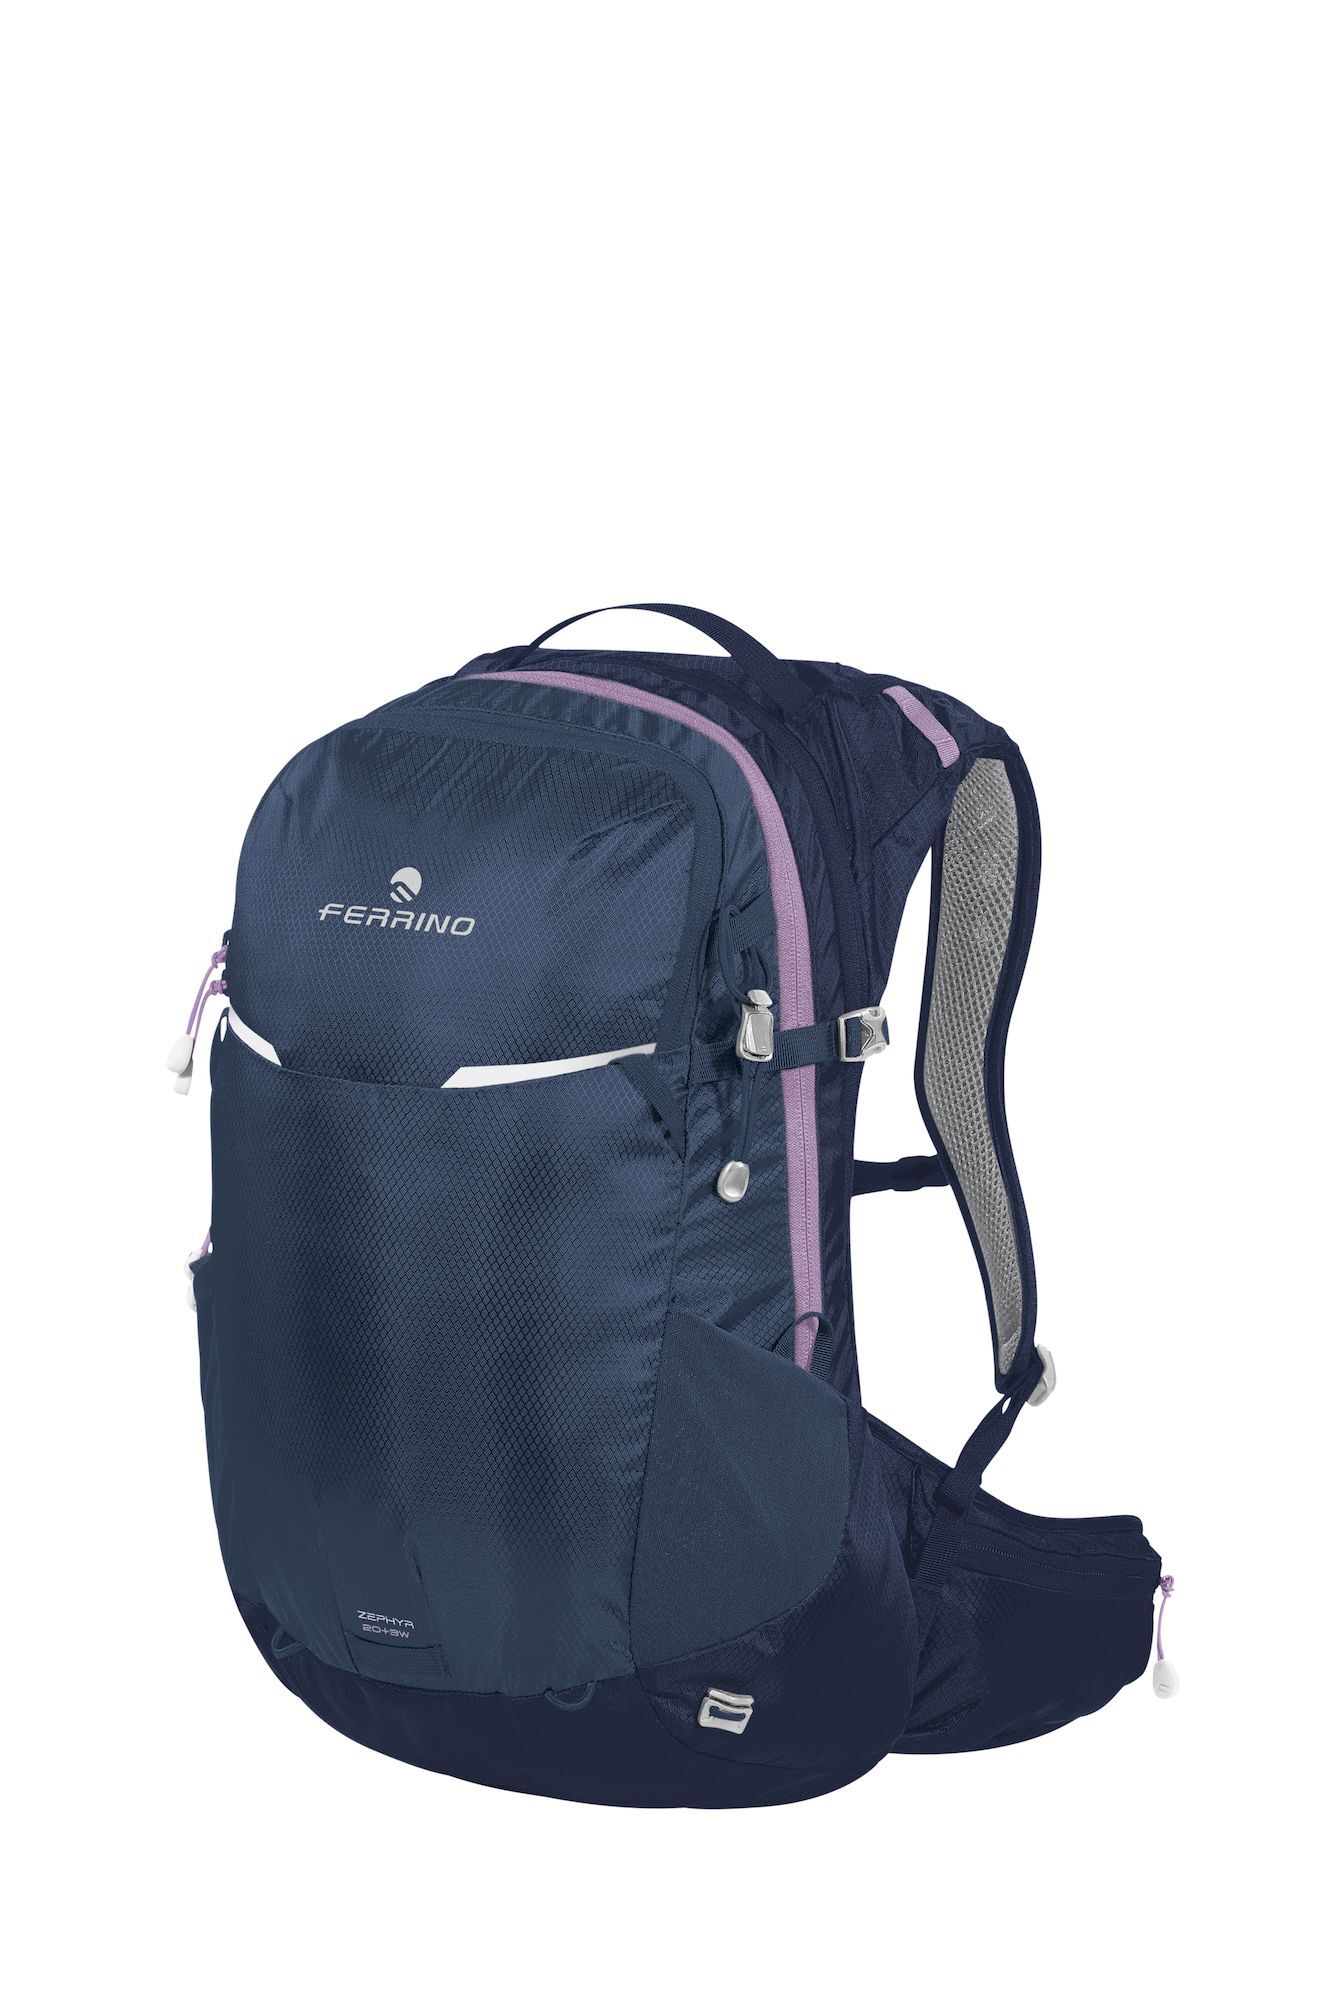 Ferrino Zephyr 20+3 - Walking backpack - Women's | Hardloop